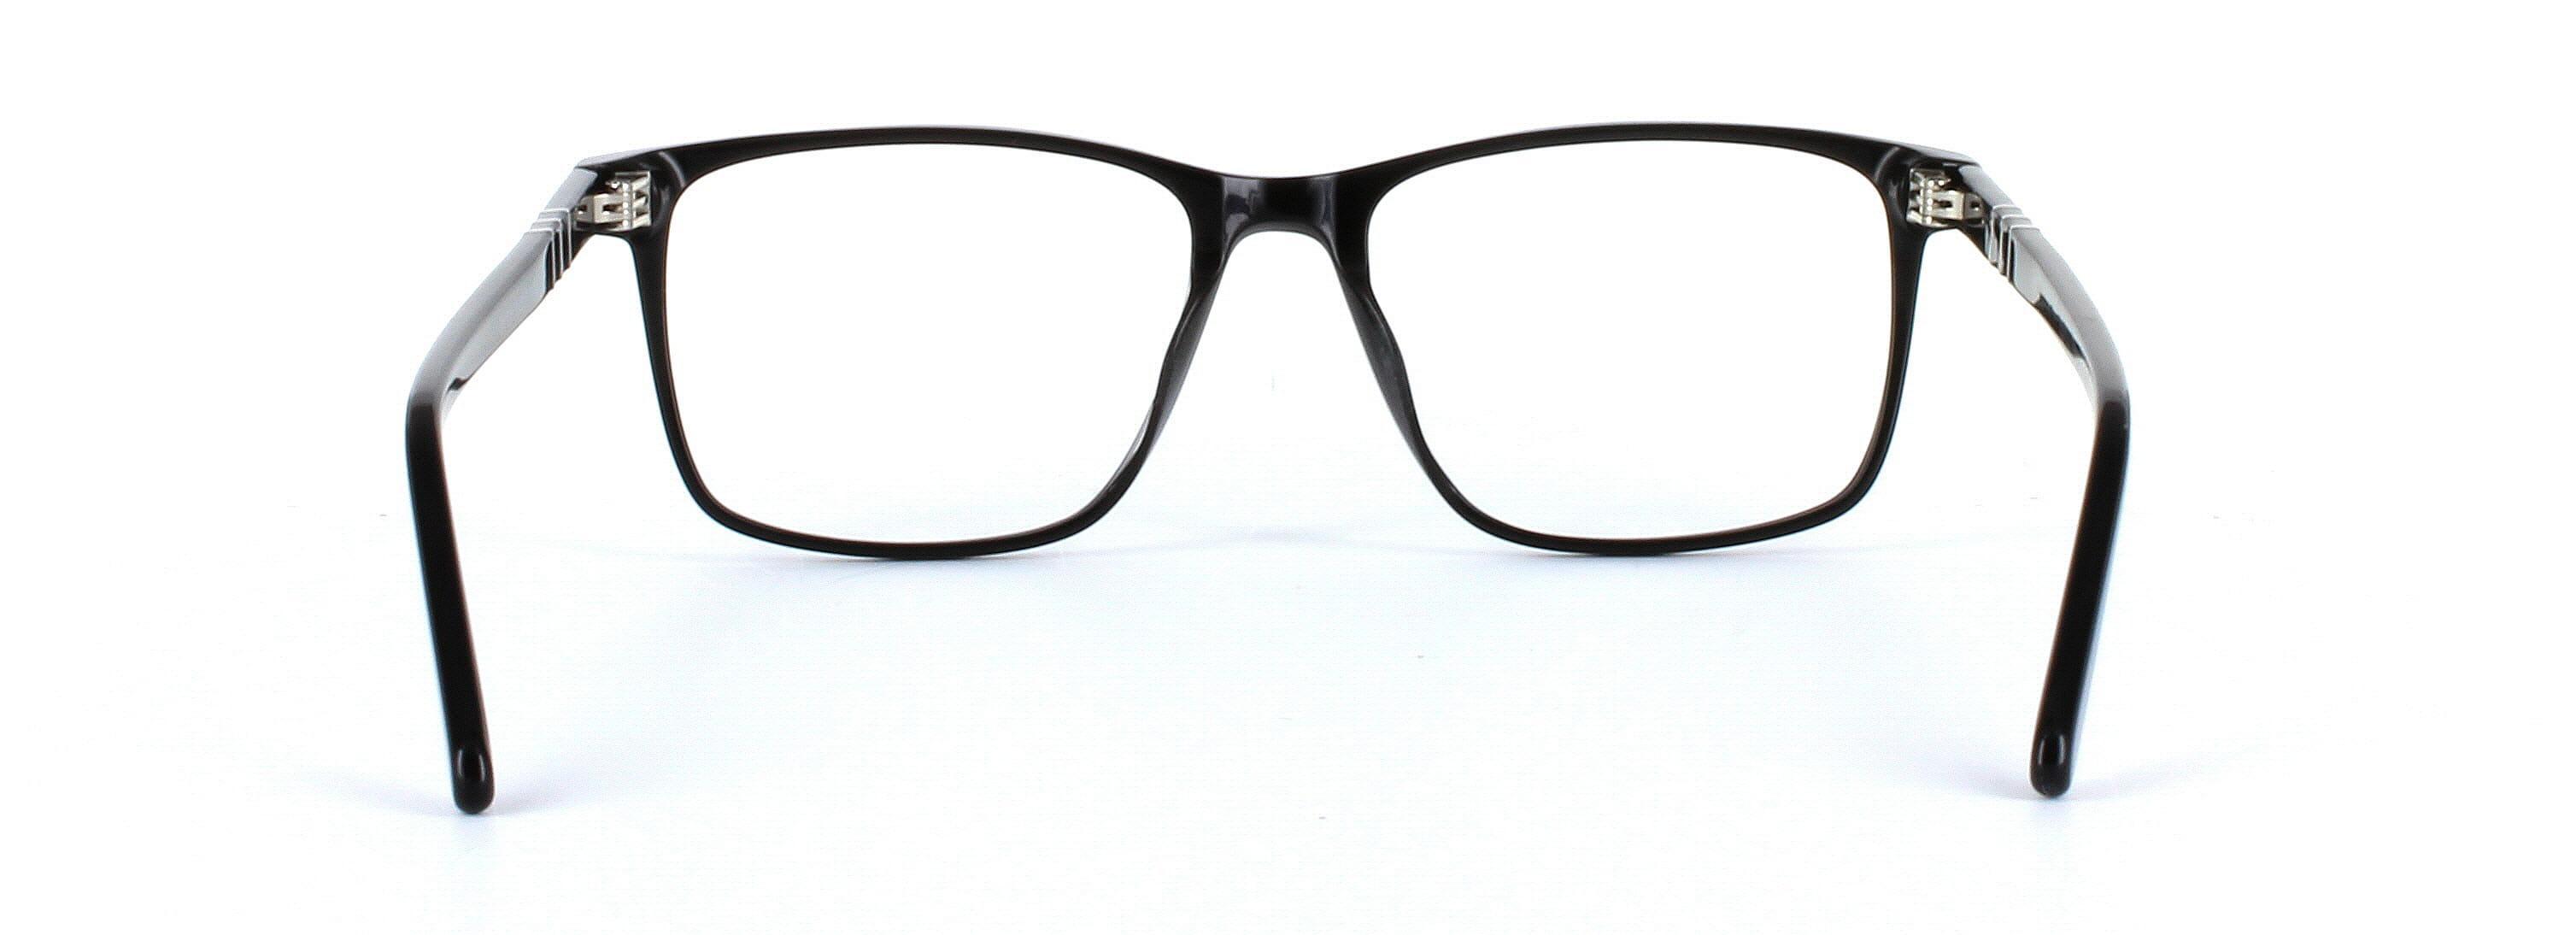 Bayley Lane Black Full Rim Rectangular Acetate Glasses - Image View 3